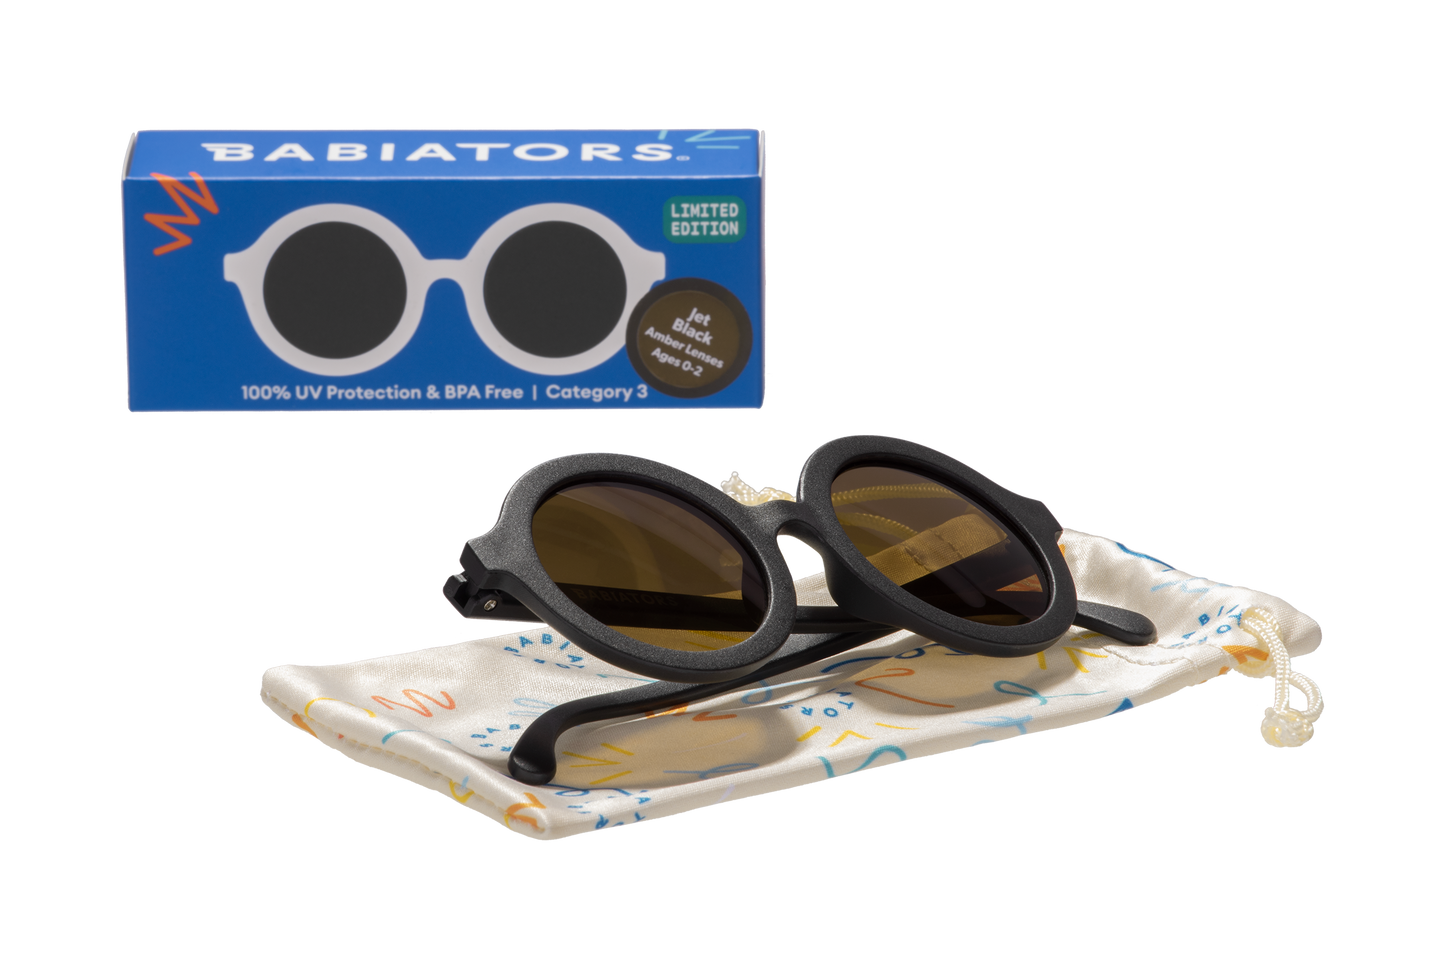 Jet Black Euro Round Sunglasses